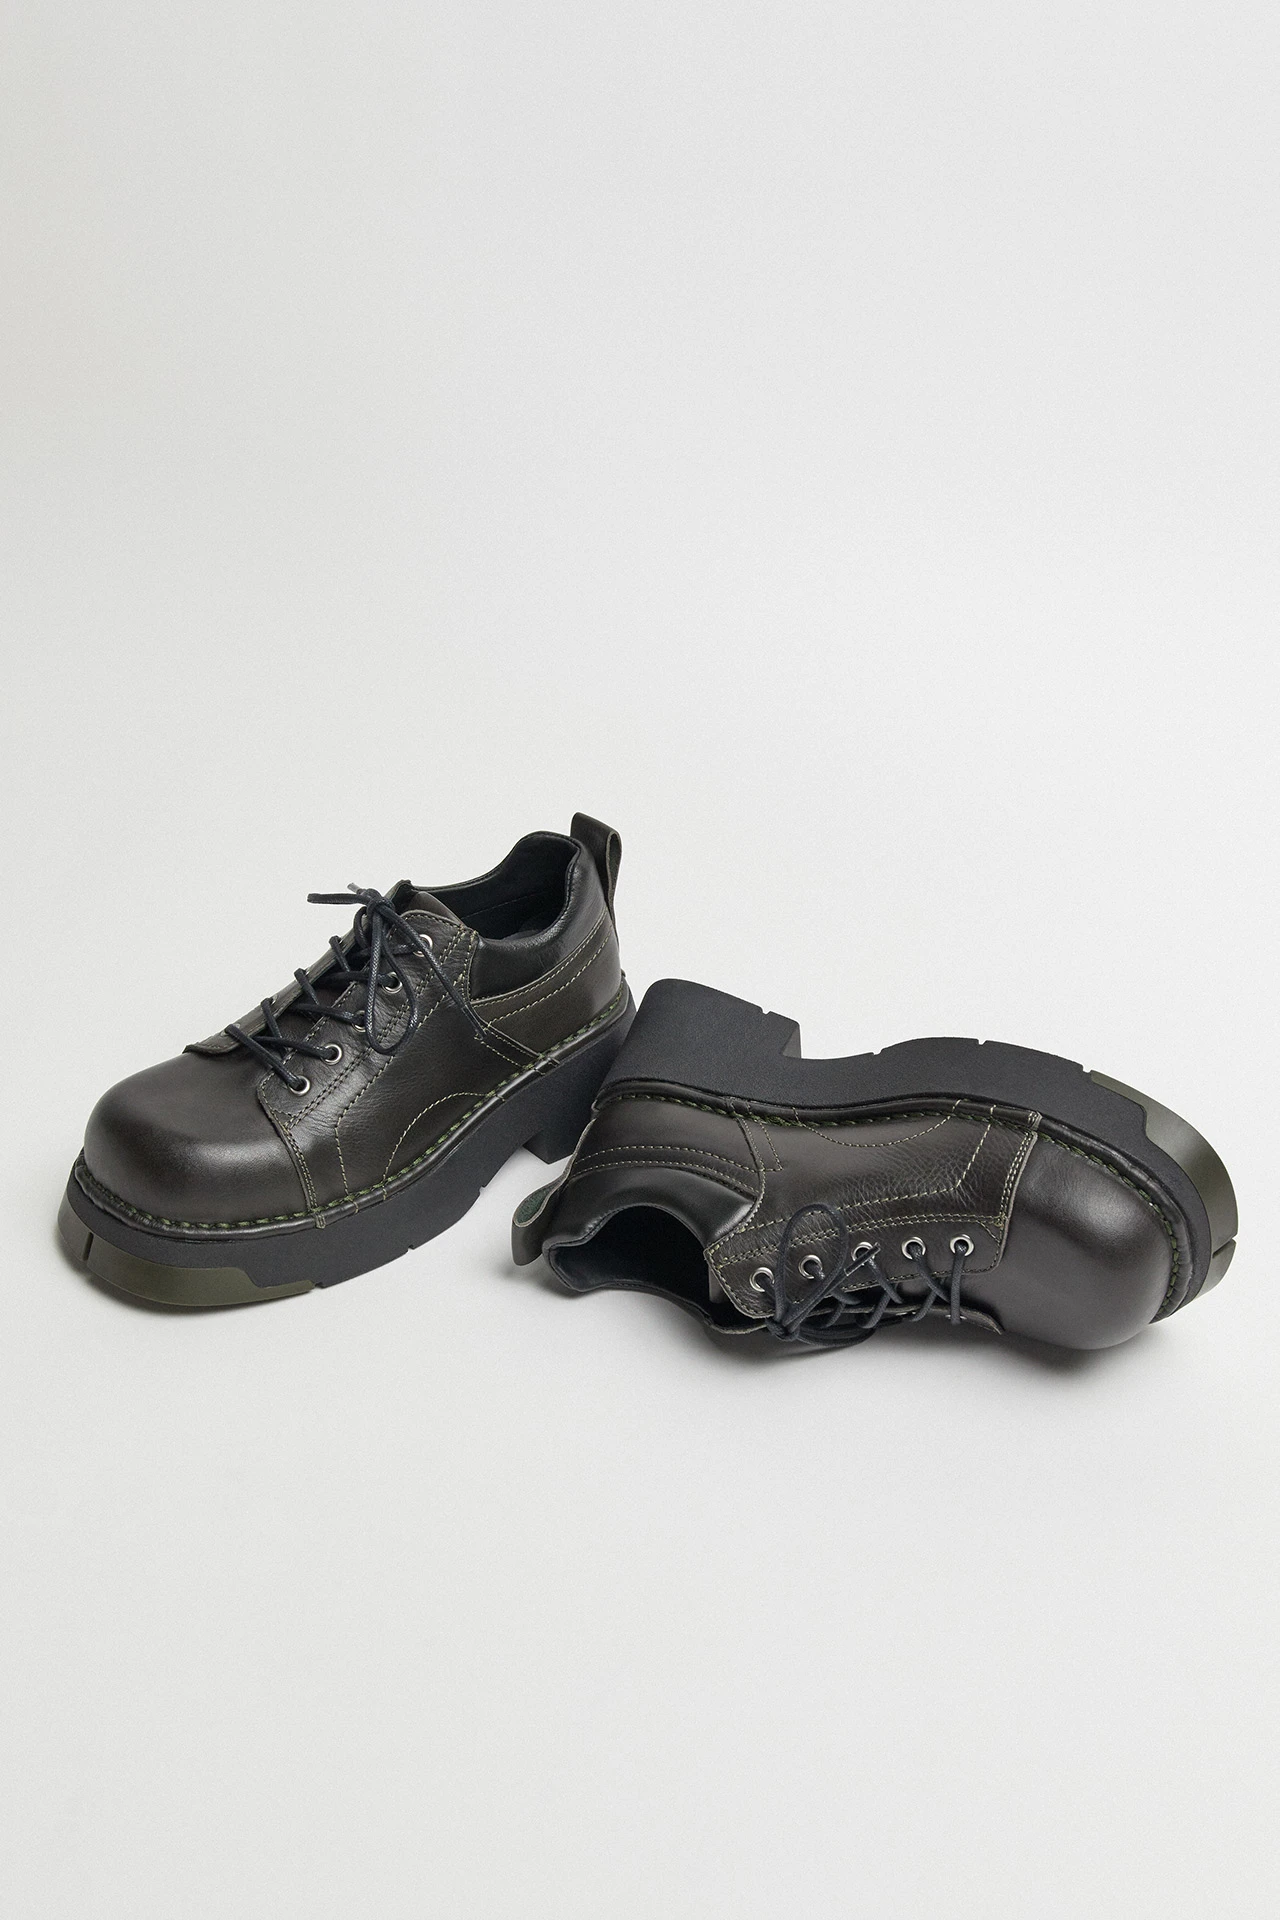 Miista-erina-khaki-ankle-boots-02